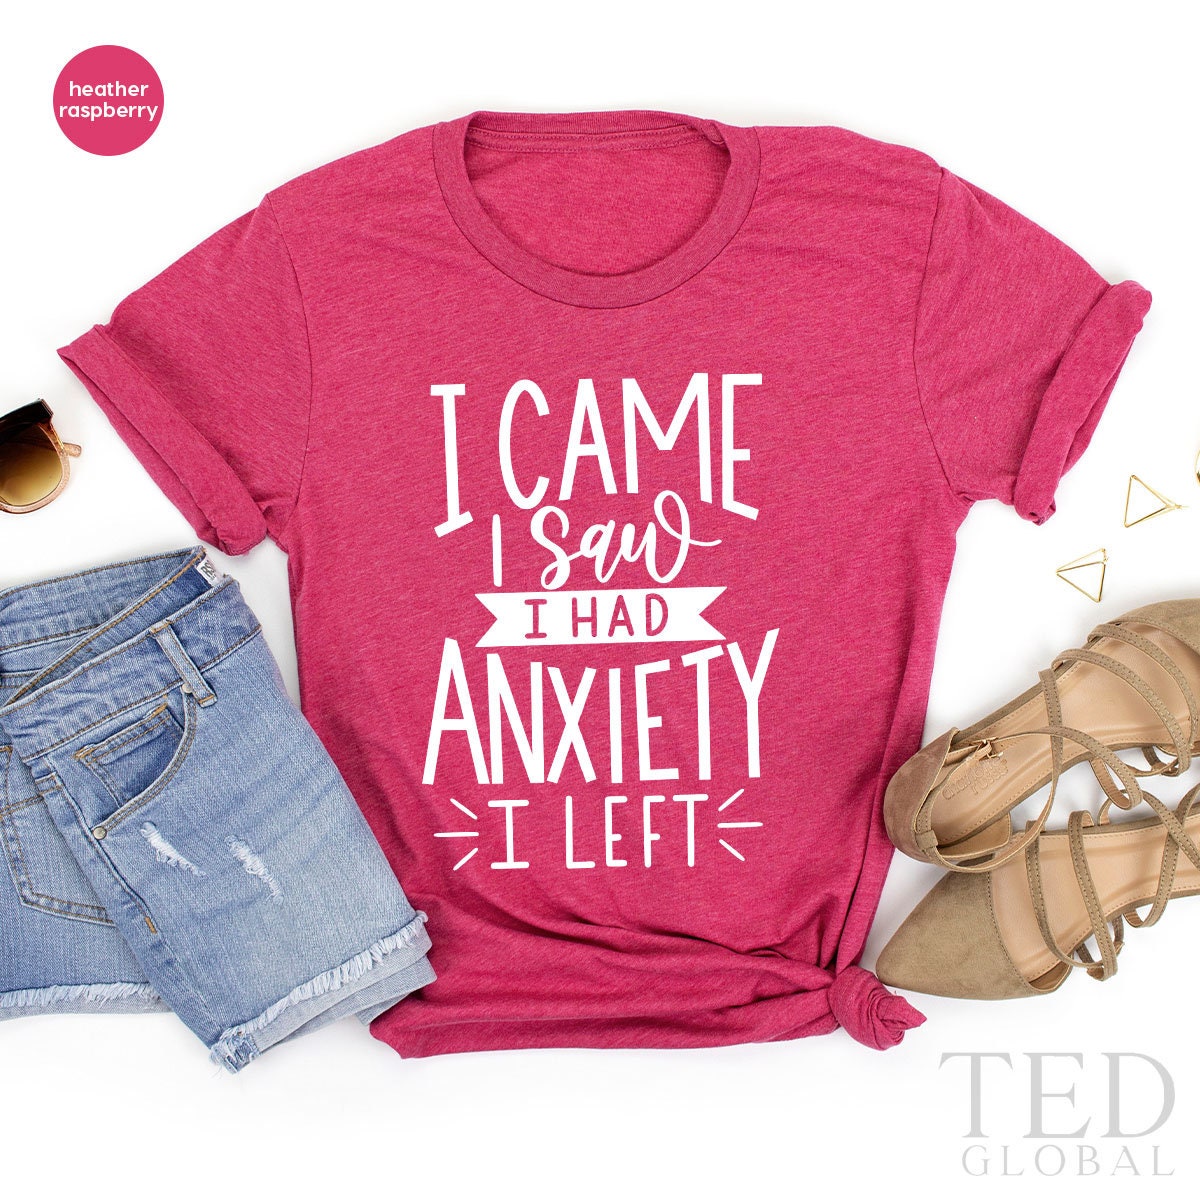 Funny Saying TShirt, Funny Anxiexty Shirt, Introvert TShirt, Humorous Shirt, I Came I aw I Had Anxiety I Left Shirt, Anxiety Tee, - Fastdeliverytees.com